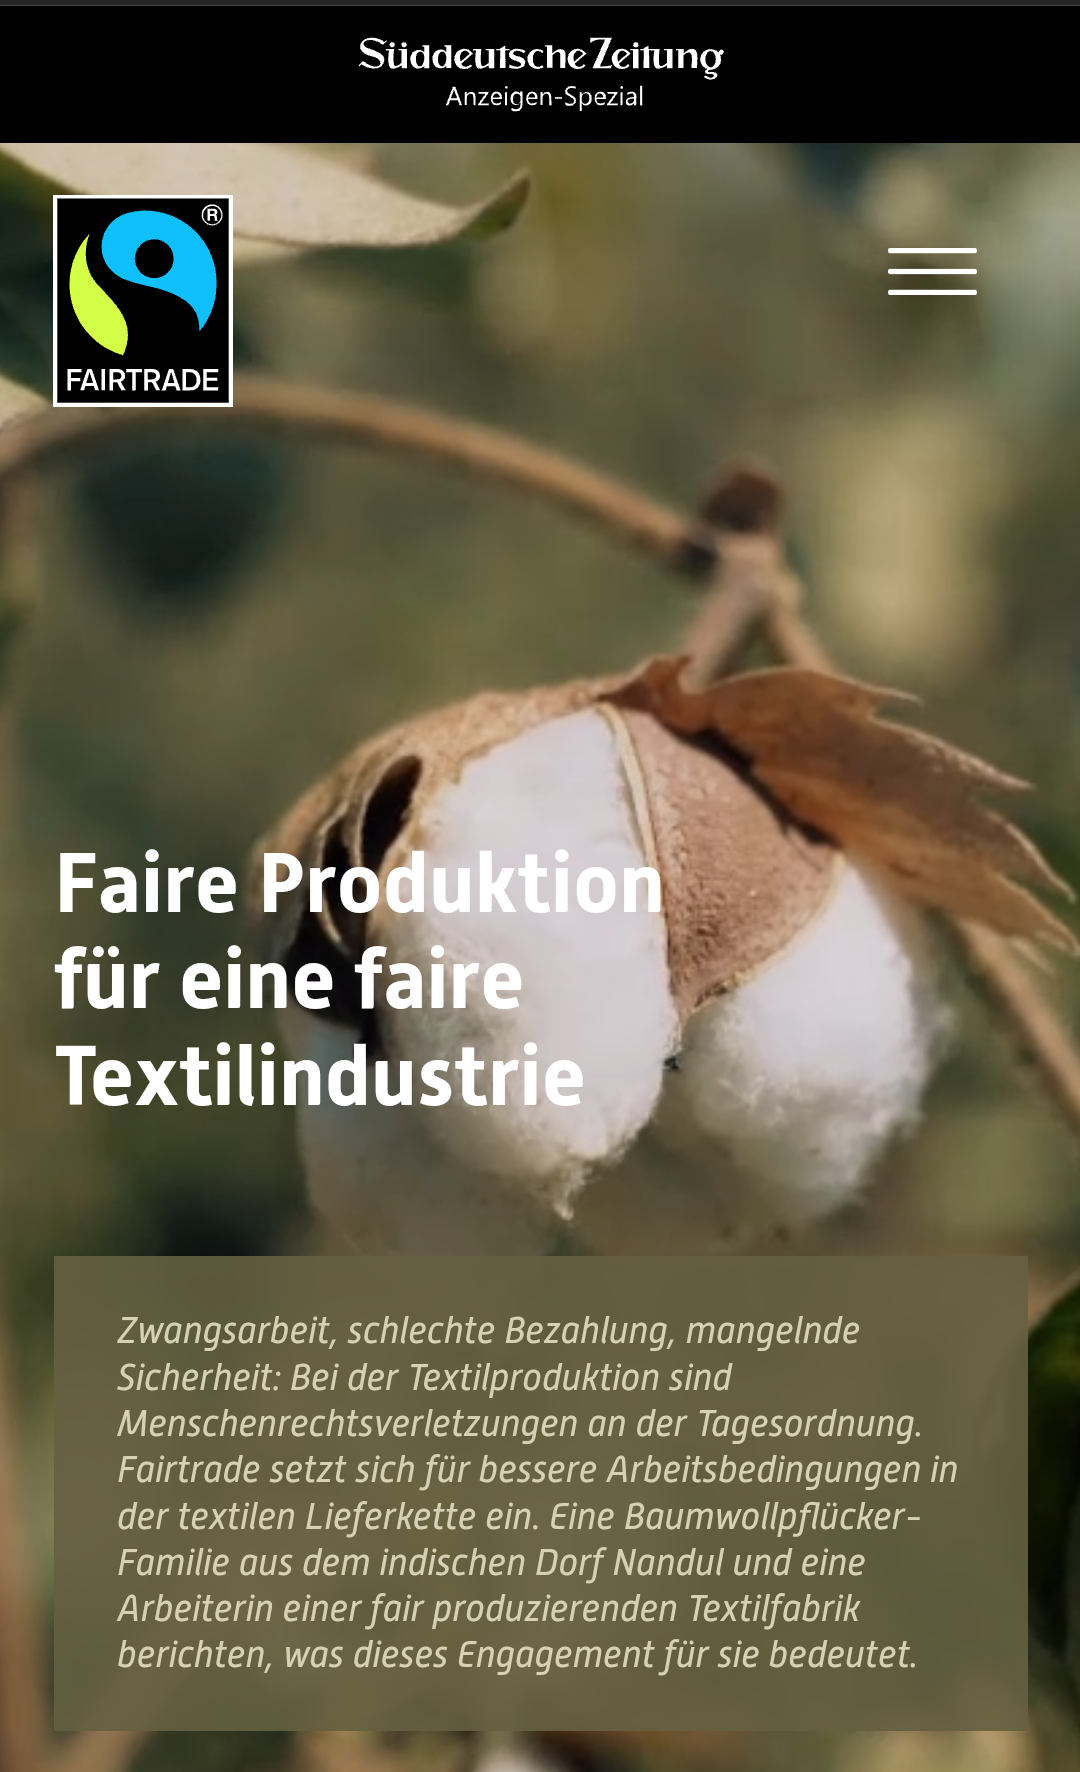 Süddeutsche Zeitung_Fair production for a fair textile industry (FAIRTRADE)